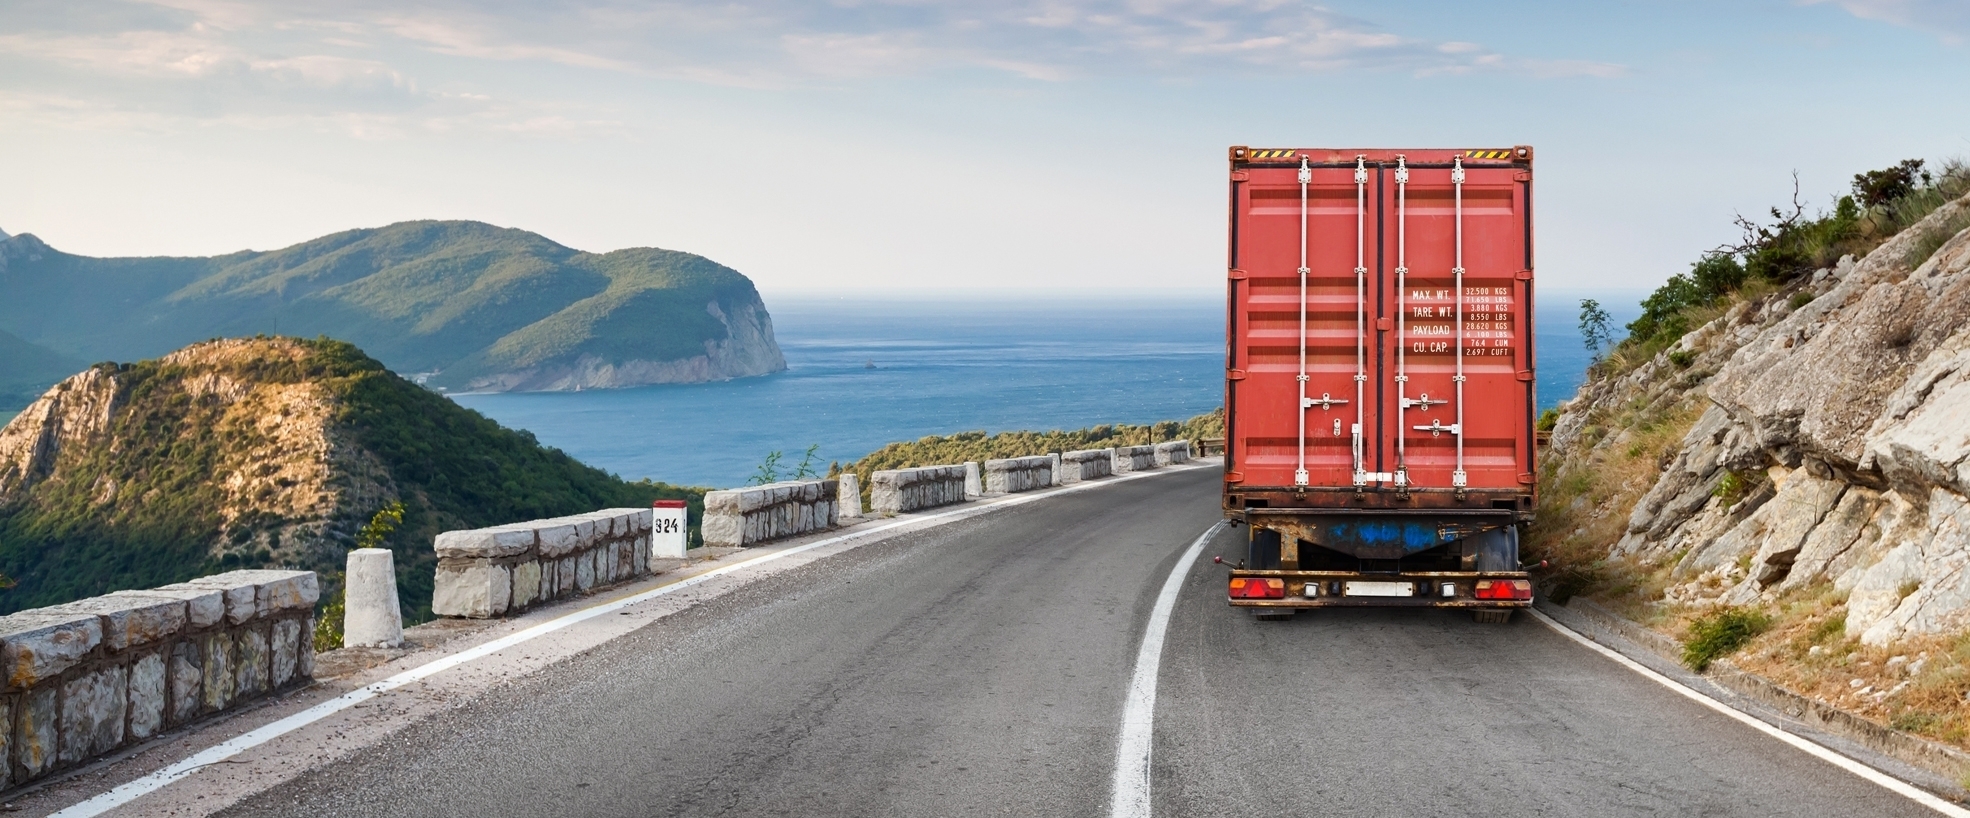 trucking and logistics